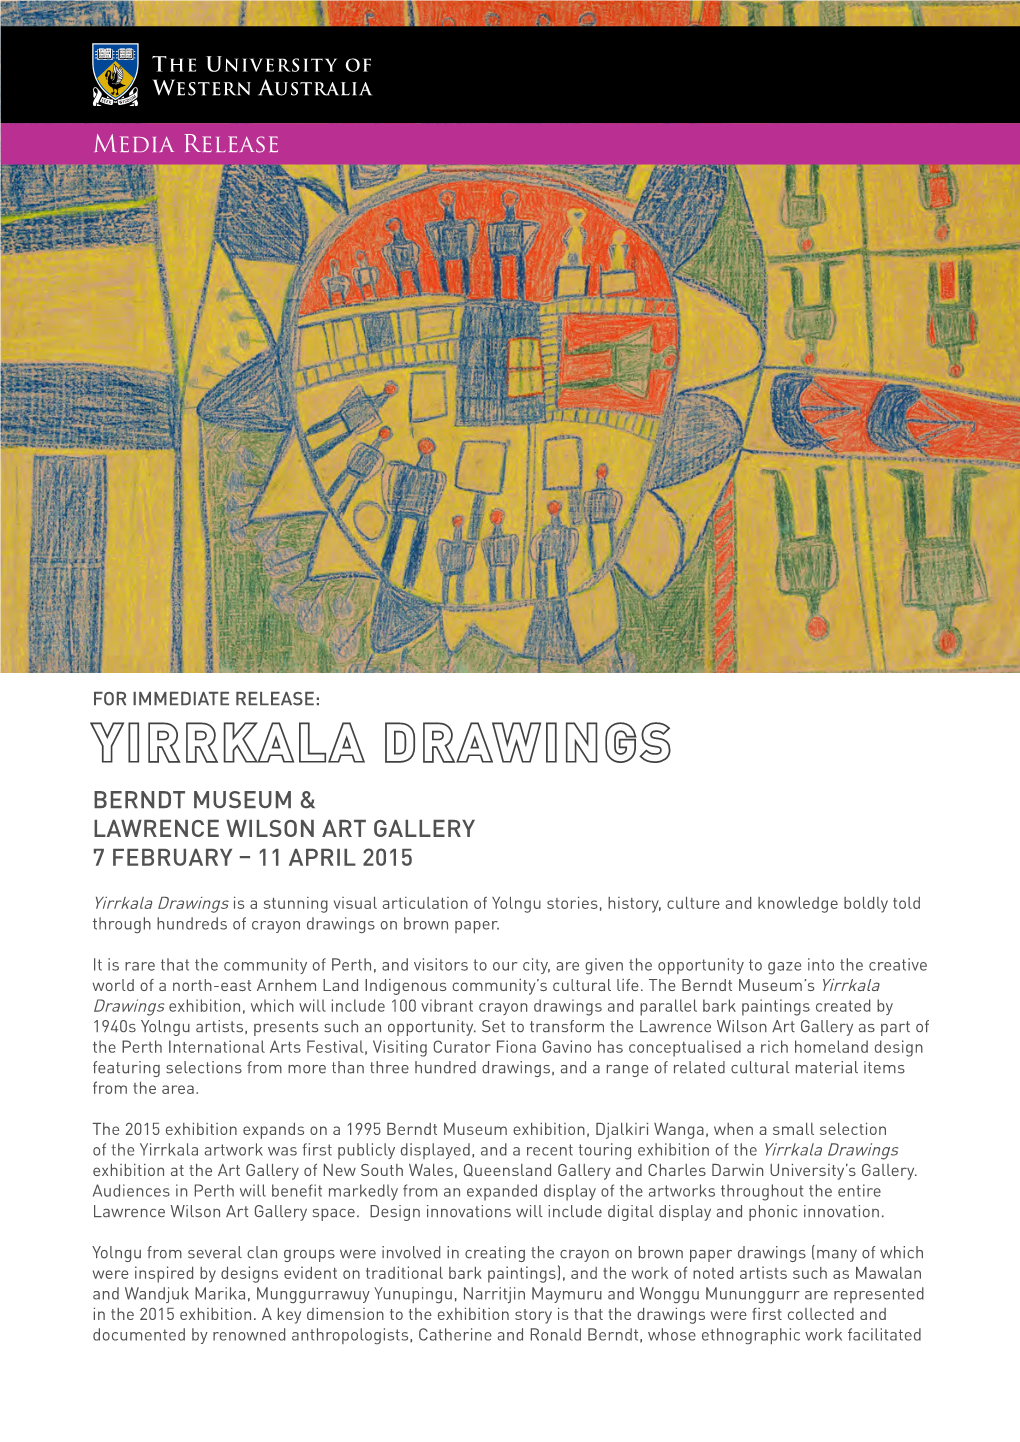 Yirrkala Drawings Berndt Museum & Lawrence Wilson Art Gallery 7 February – 11 April 2015